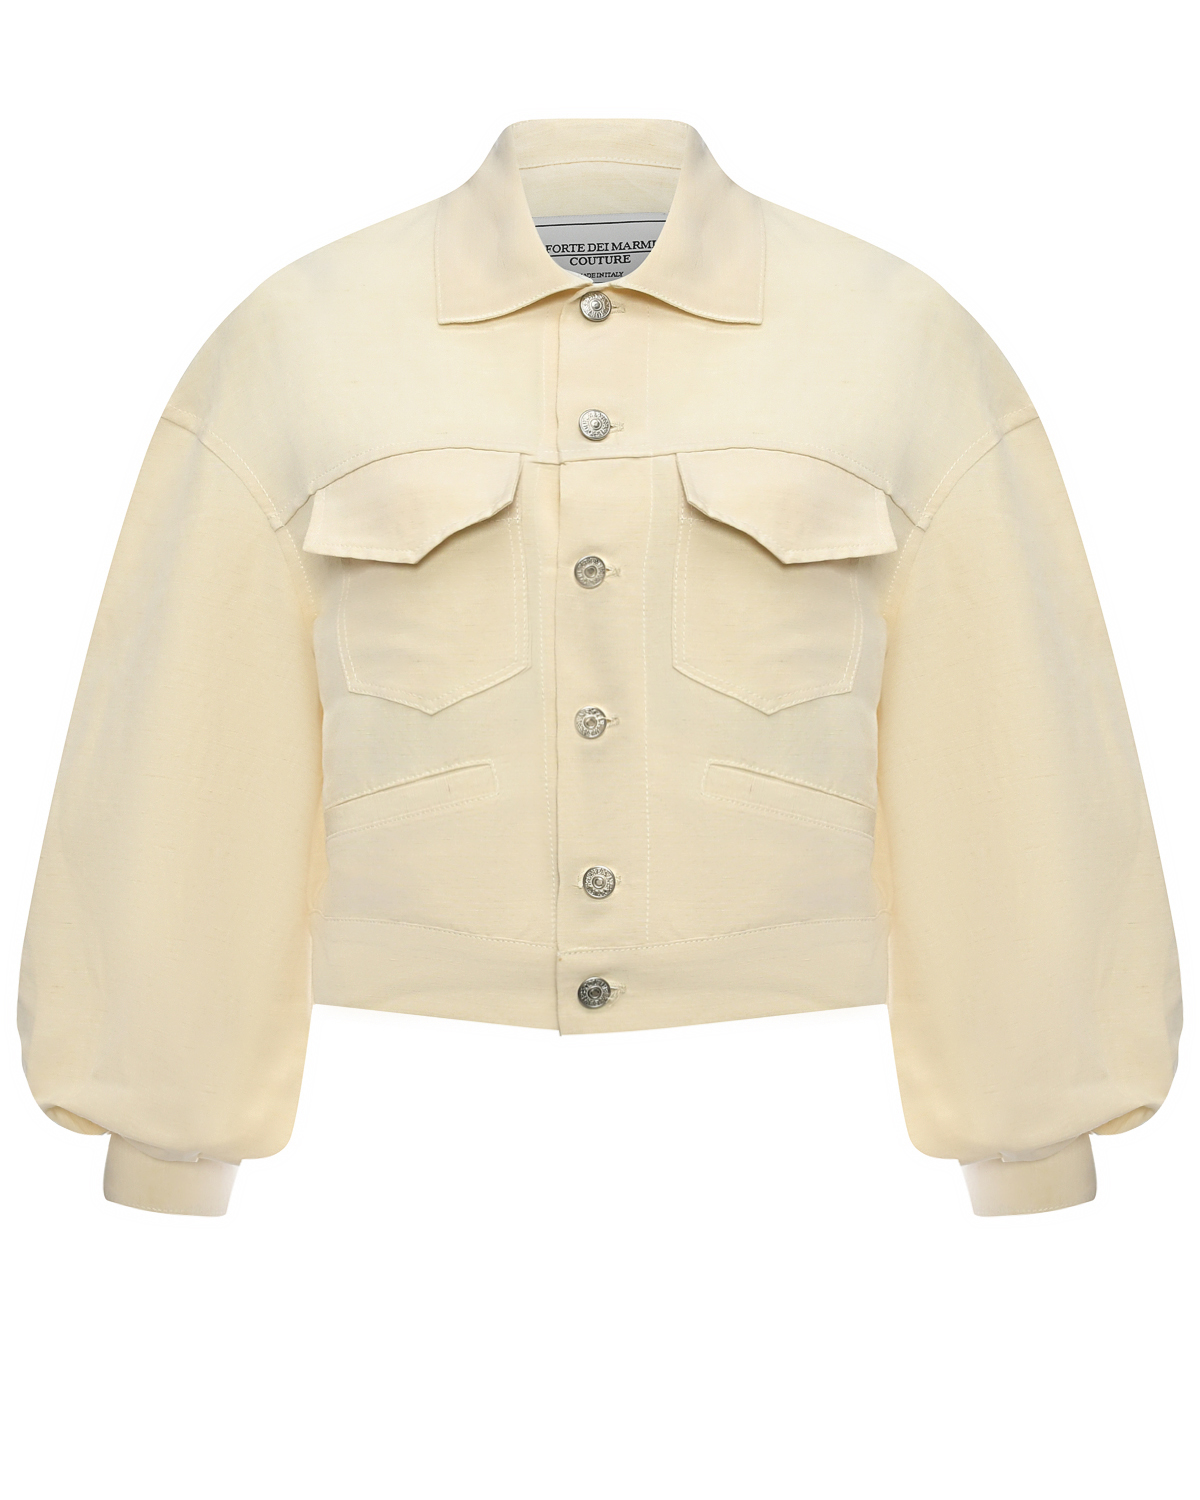 Куртка с разрезами по бокам, бежевая Forte dei Marmi Couture, размер 40, цвет бежевый - фото 1